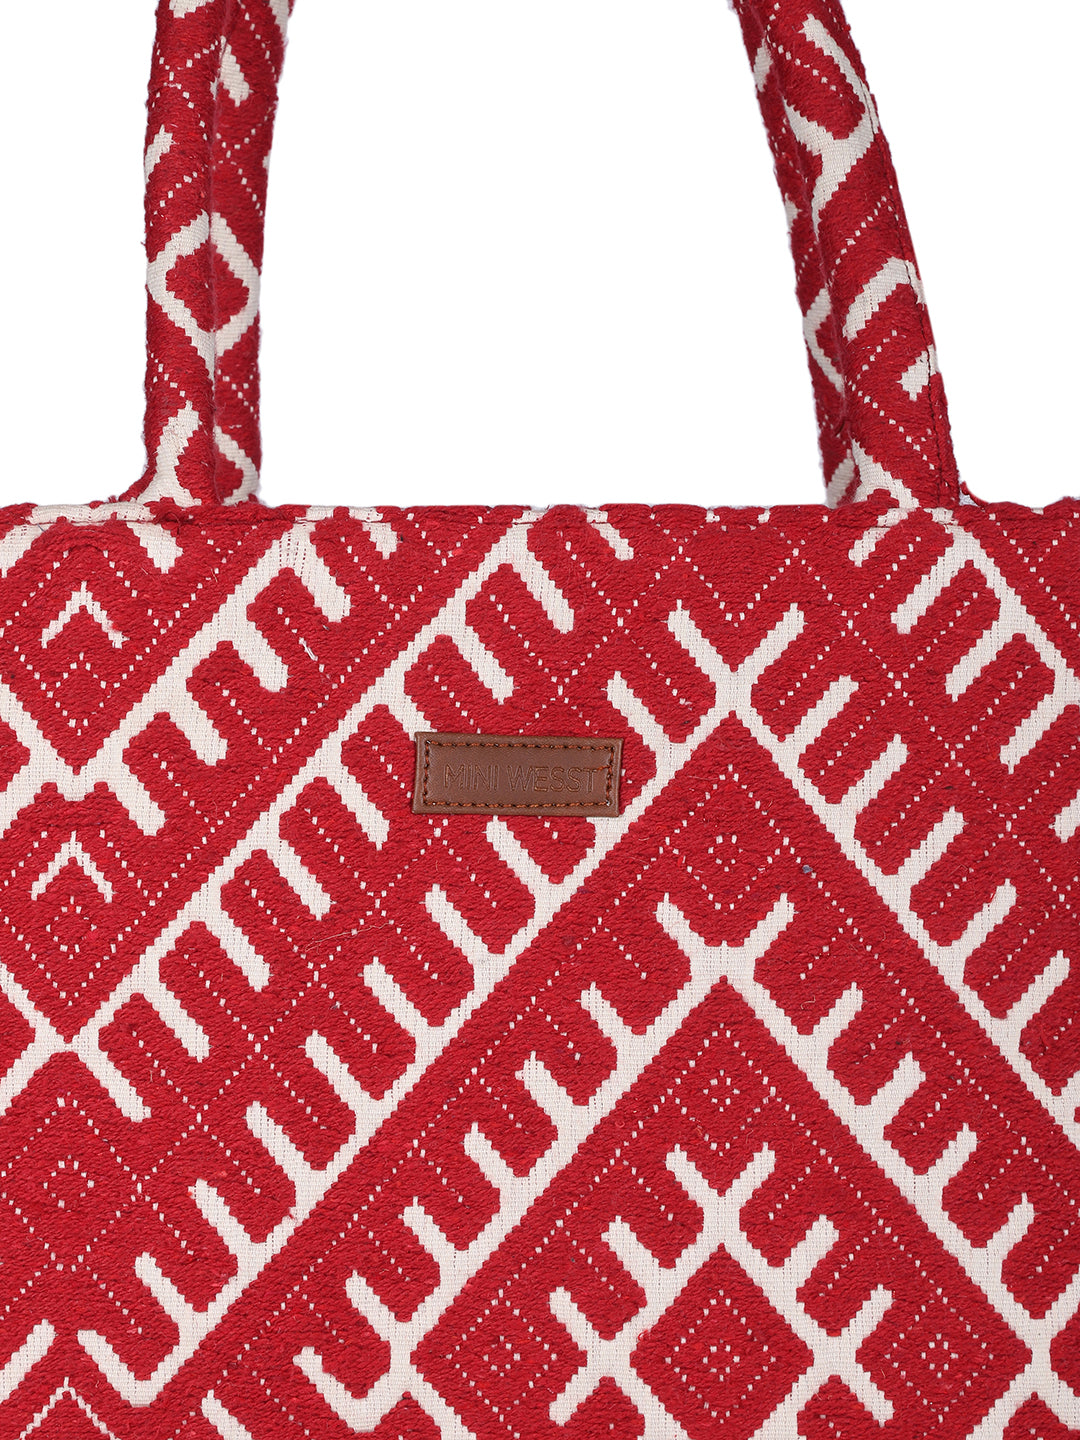 MINI WESST Red Graphic Tote Bag(MWTB117PR)